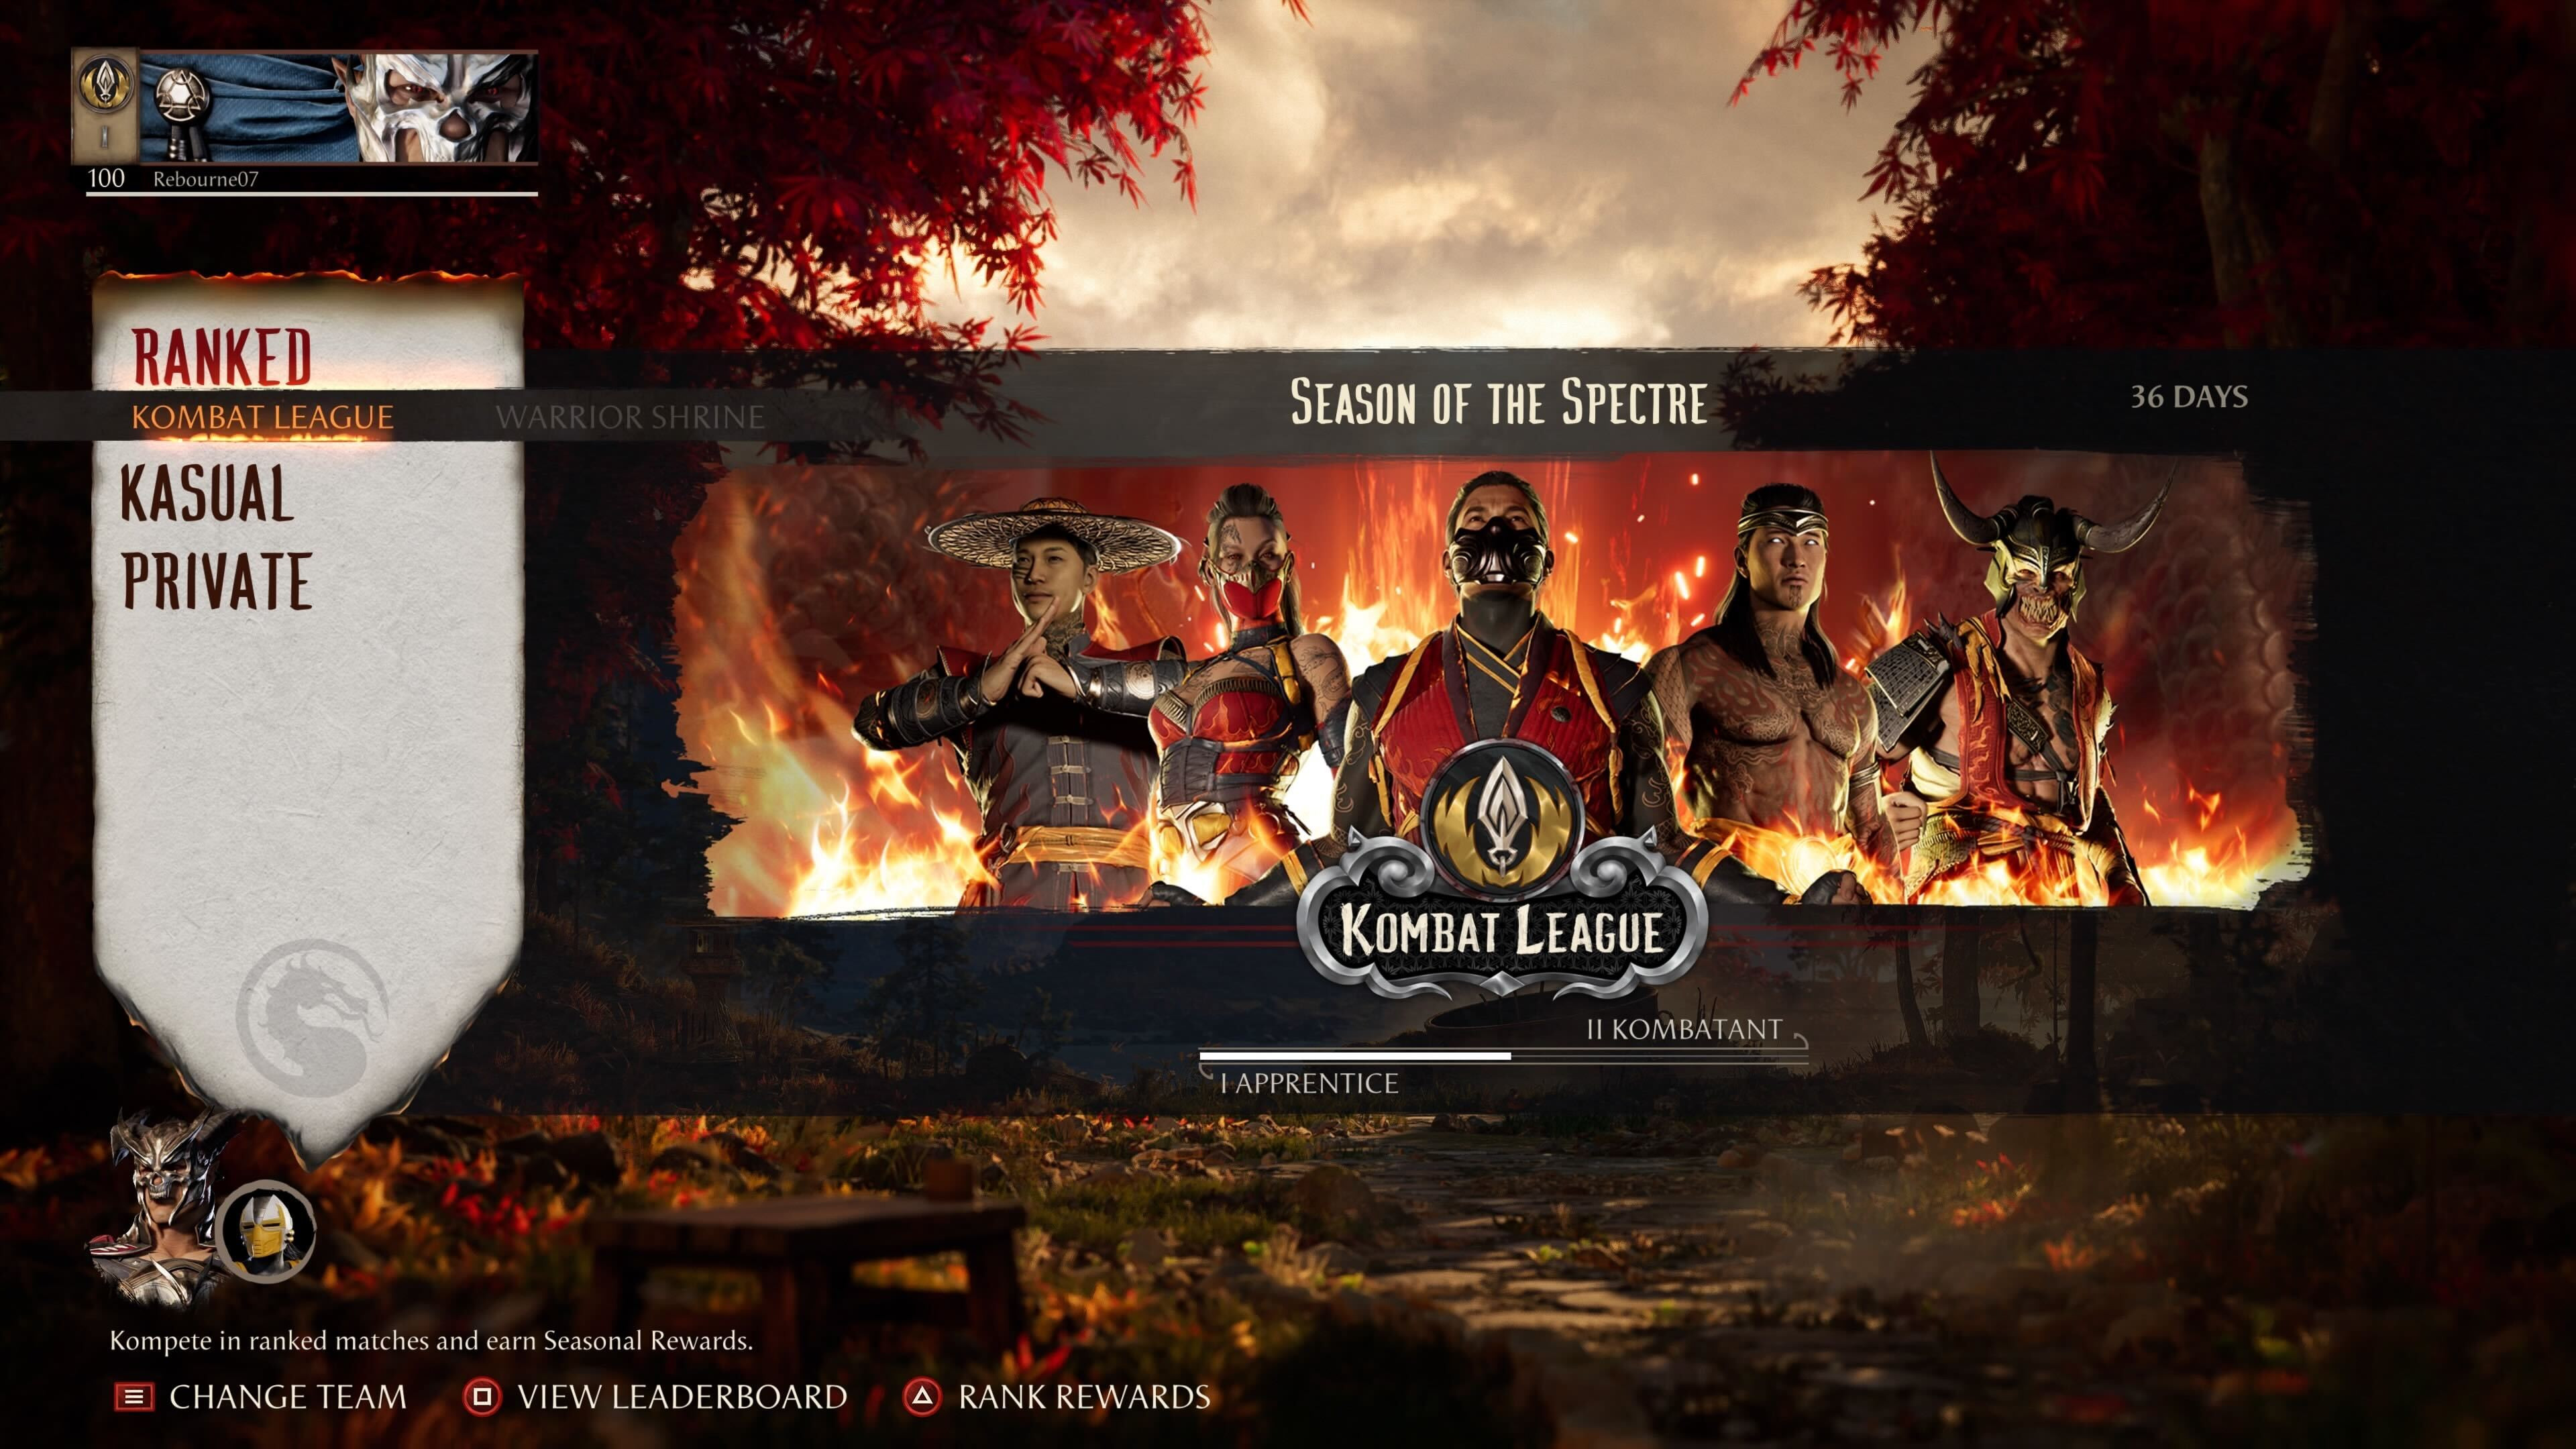 Mortal Kombat 1 Titan Battle explained: How to beat, rewards